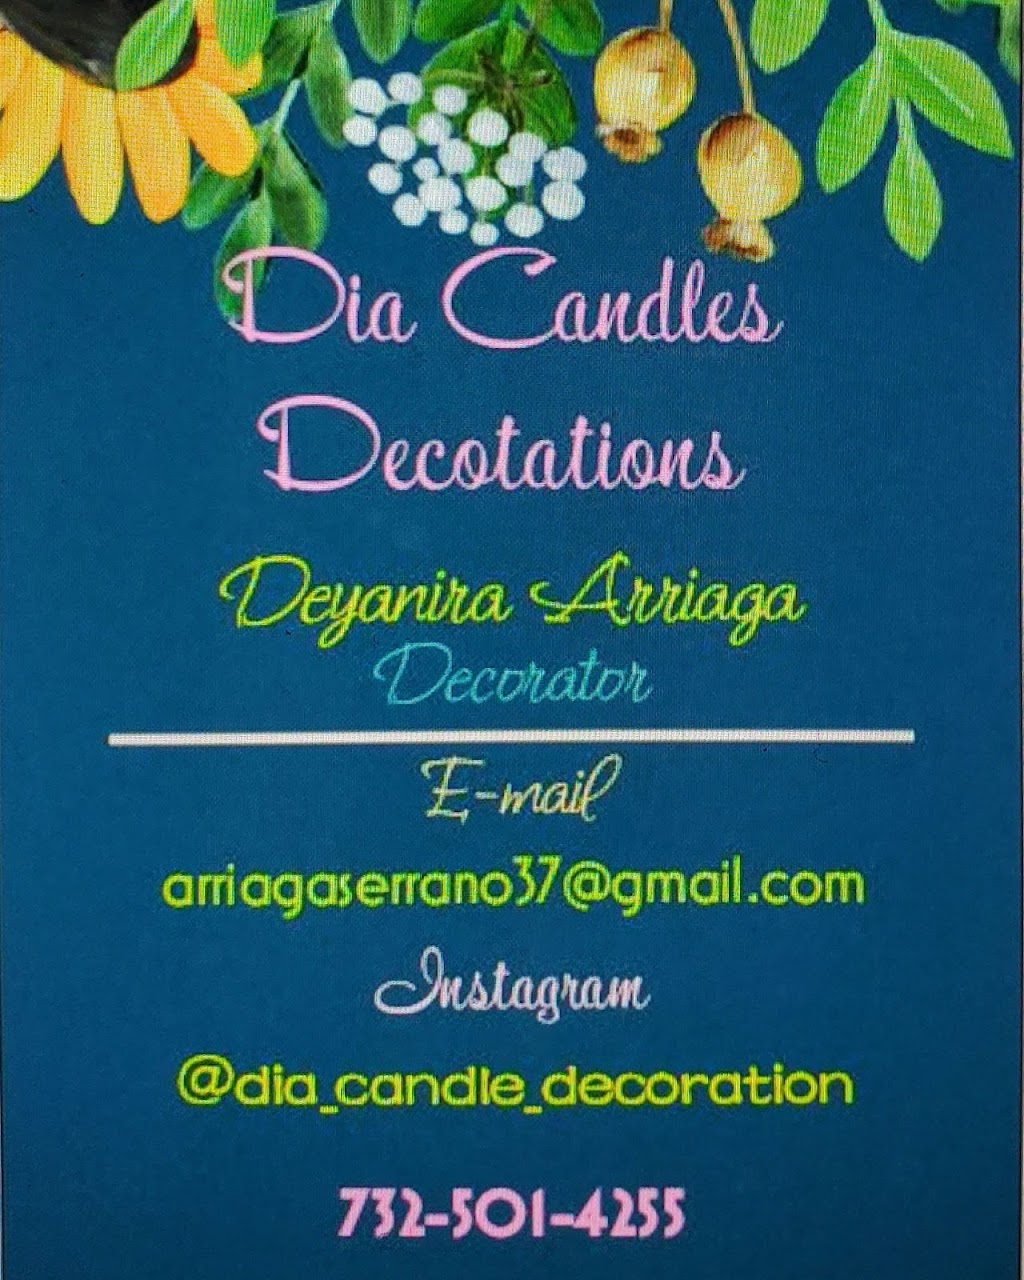 DIa Candles Decorations | Carteret, NJ 07008 | Phone: (732) 501-4255